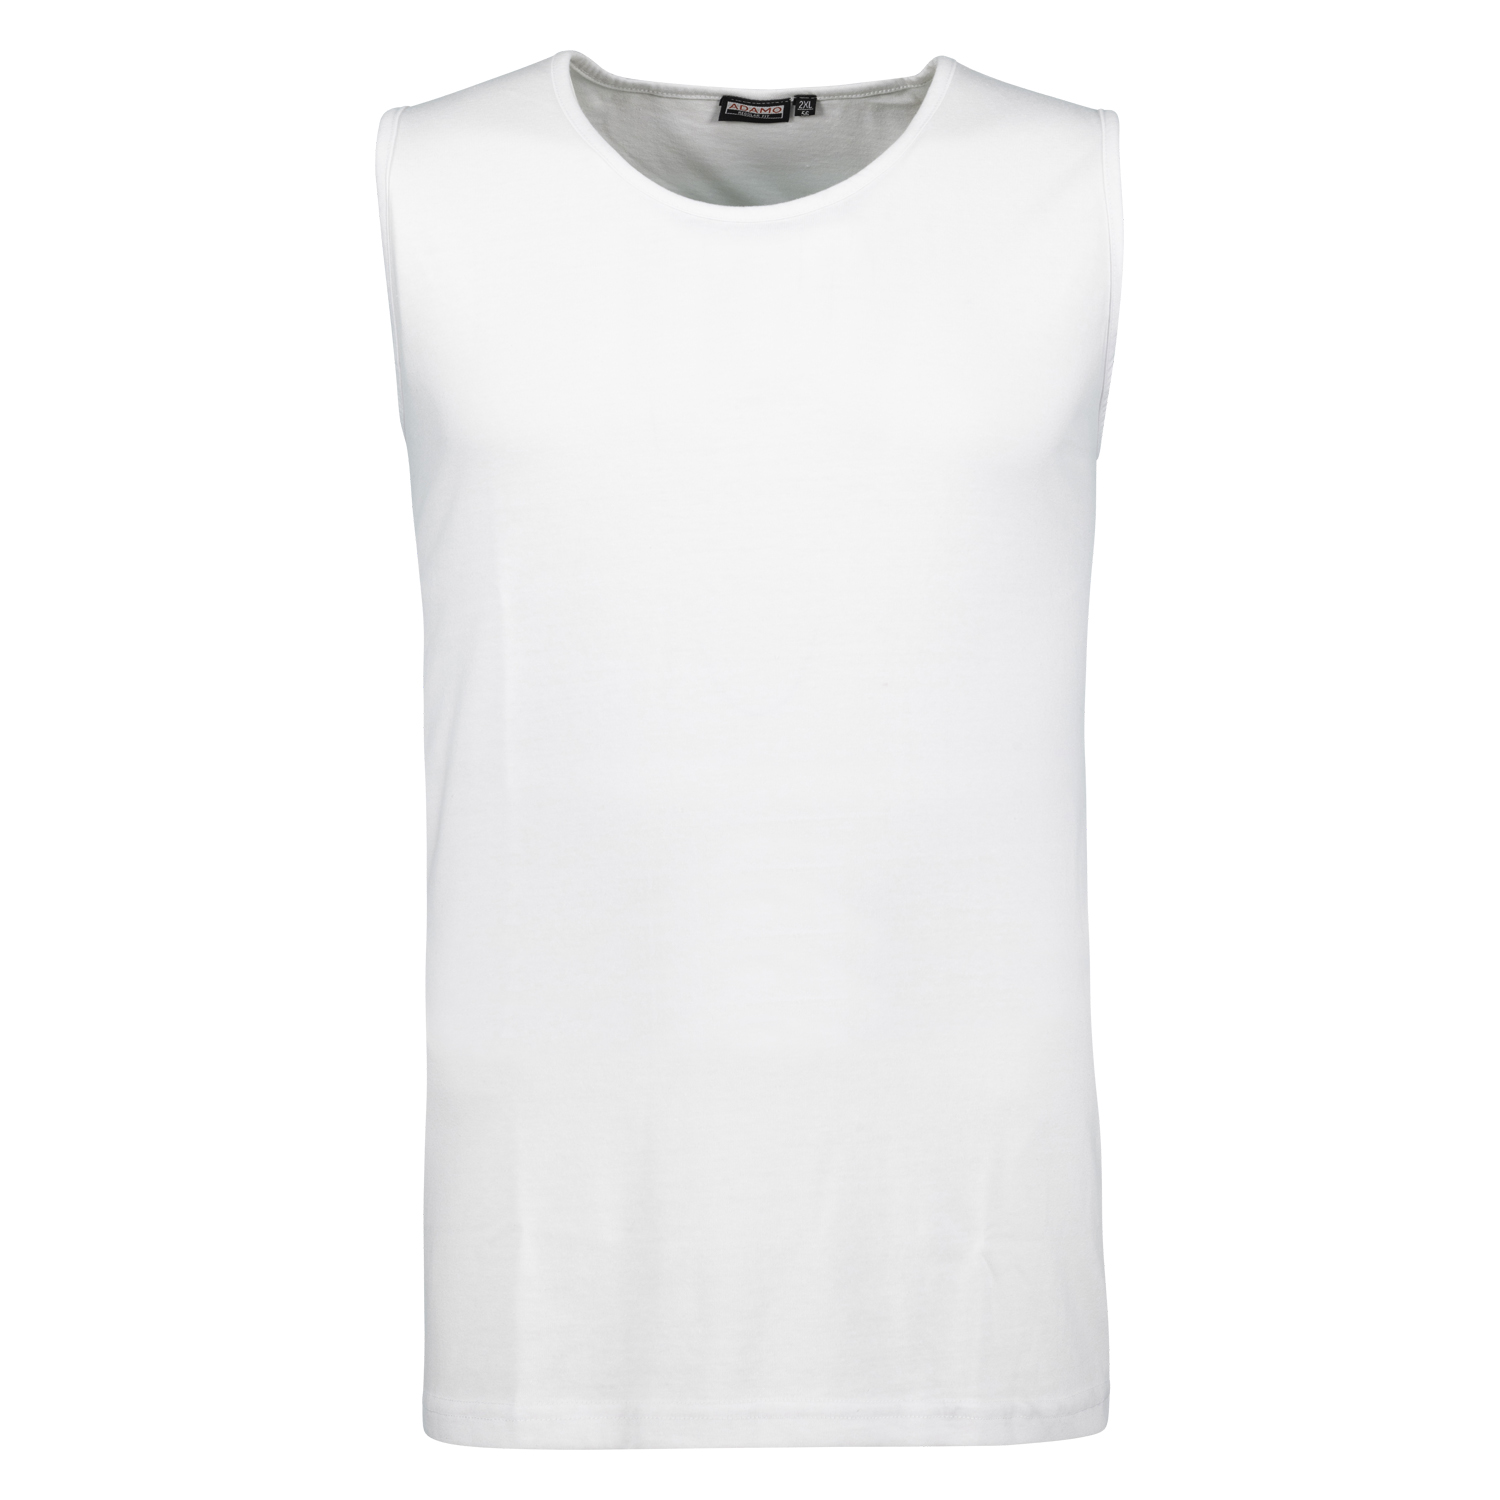 White muscle shirt ROD COMFORT FIT by ADAMO till oversize 12XL